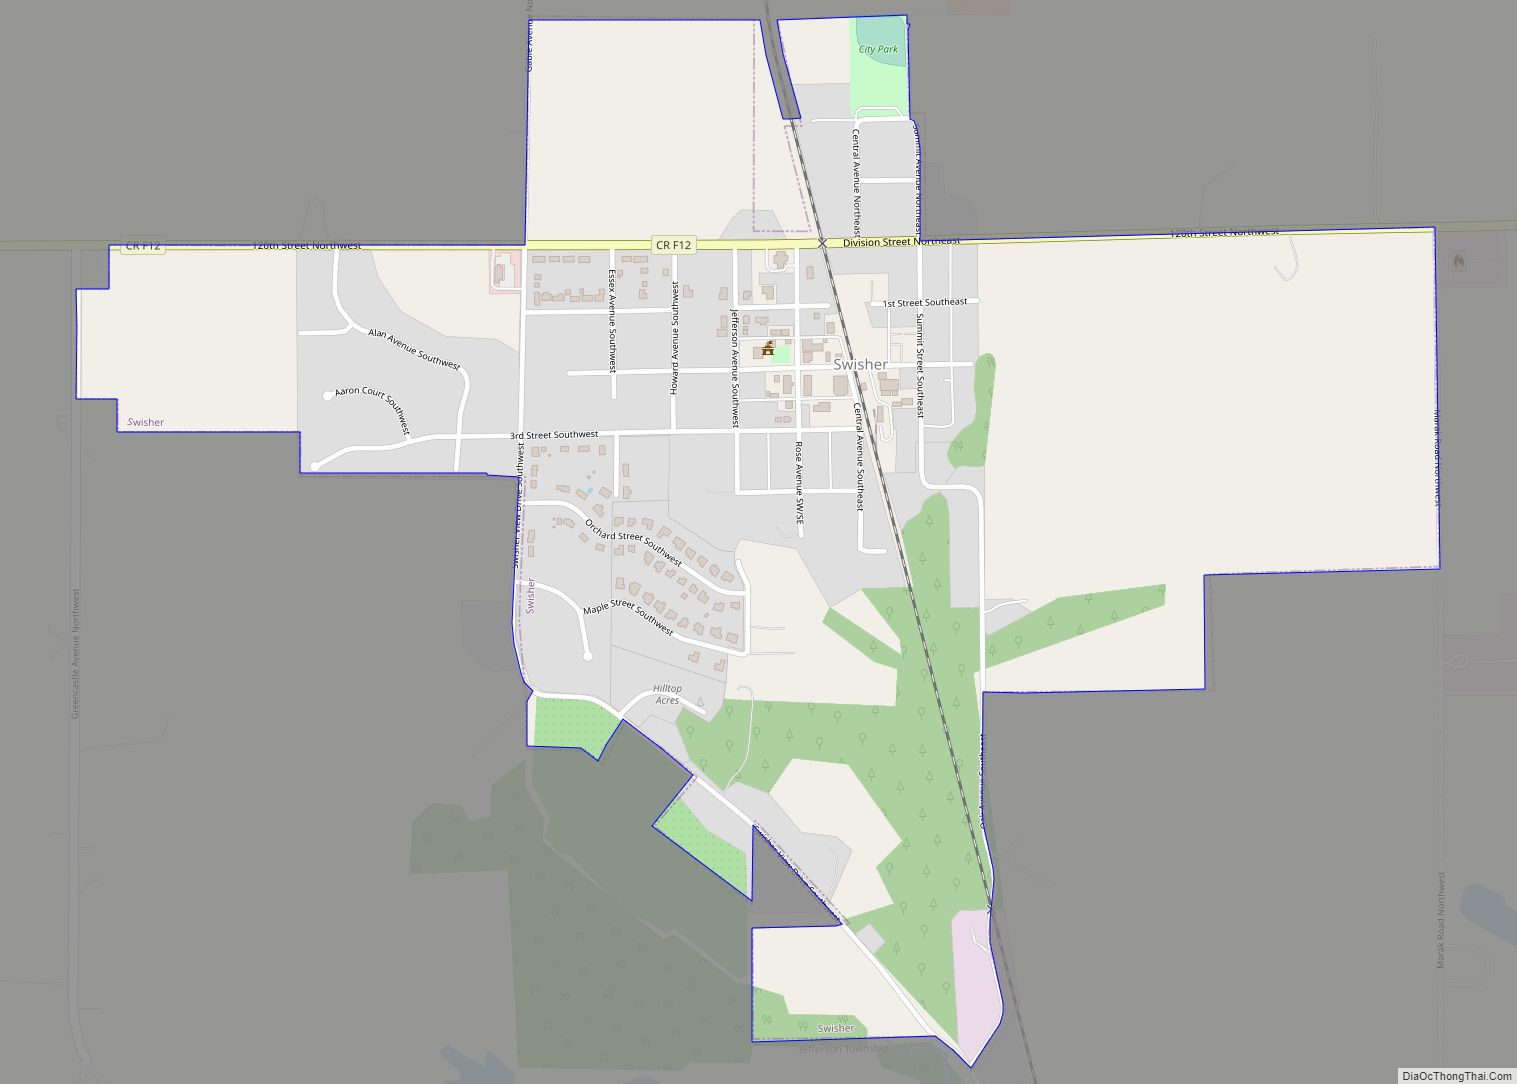 Map of Swisher city